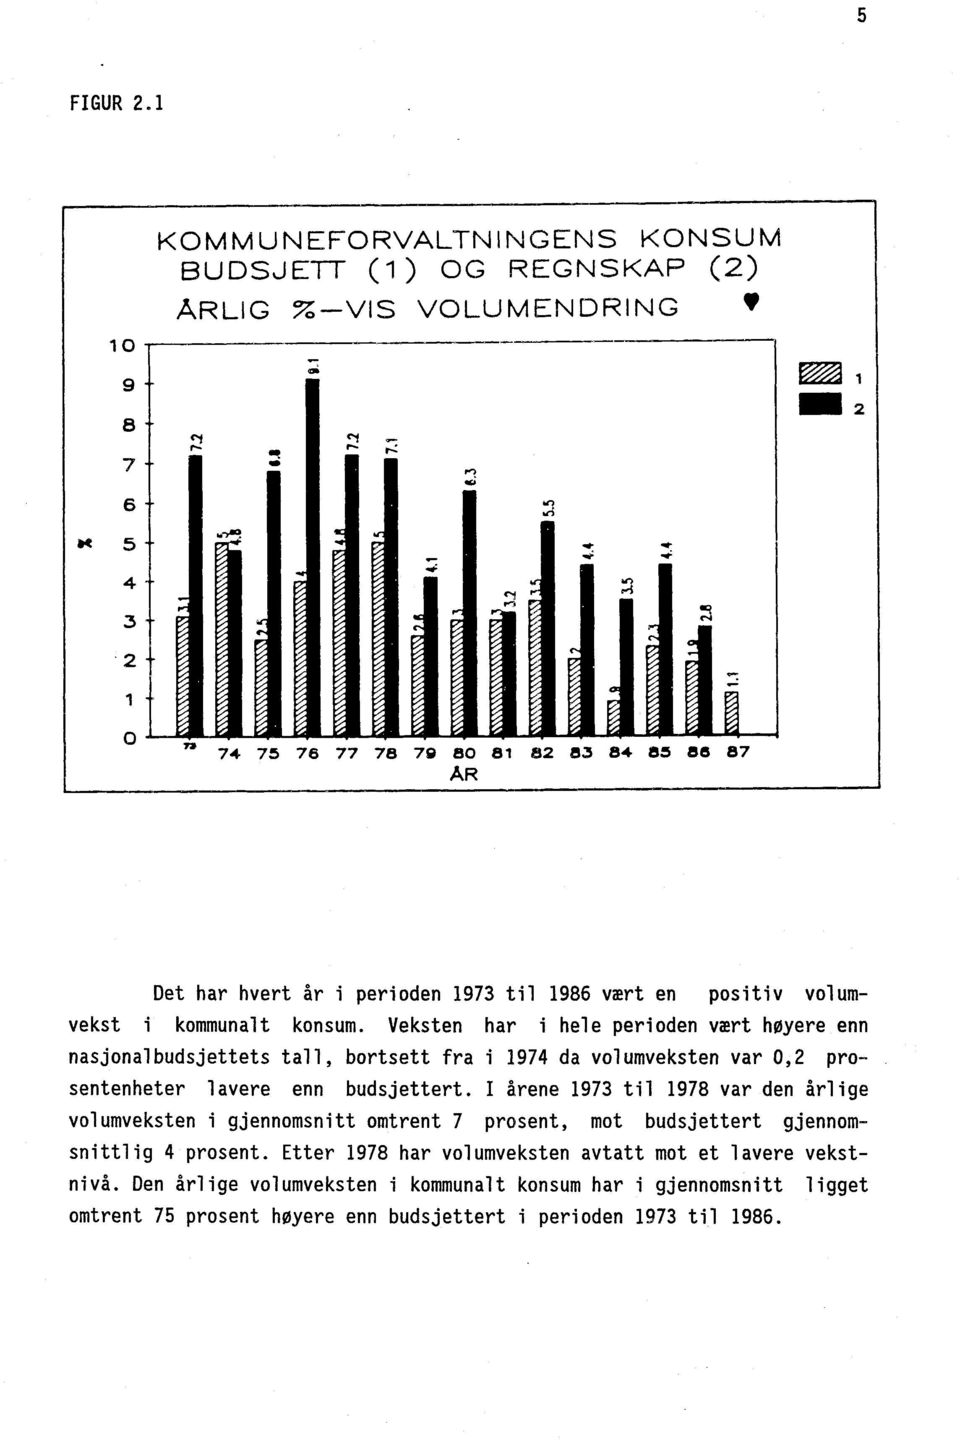 perioden 1973 til 1986 vært en positiv volumvekst i kommunalt konsum.